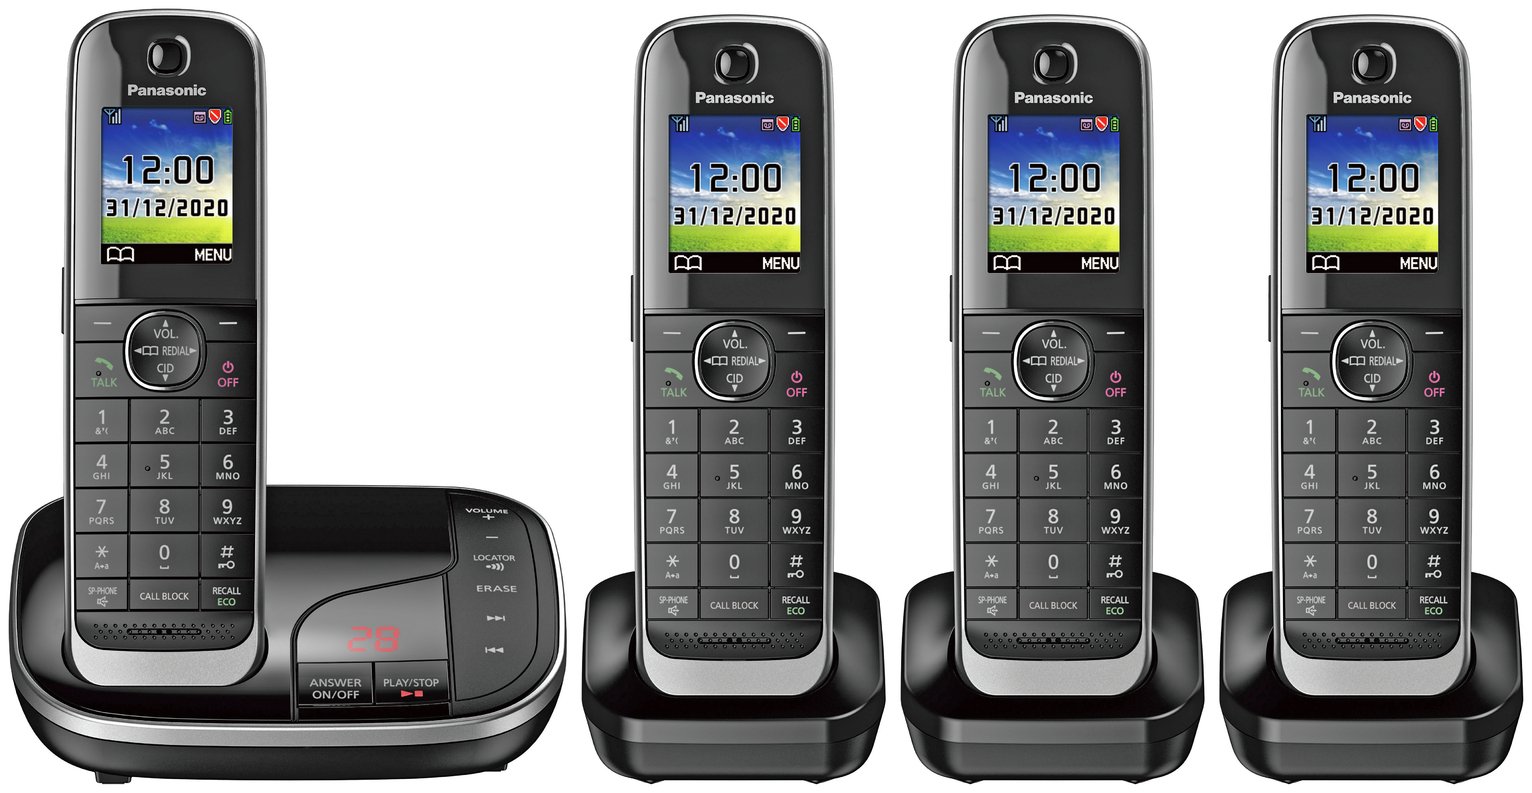 Panasonic KX-TGJ424 Cordless Phone with Answer Machine-Quad